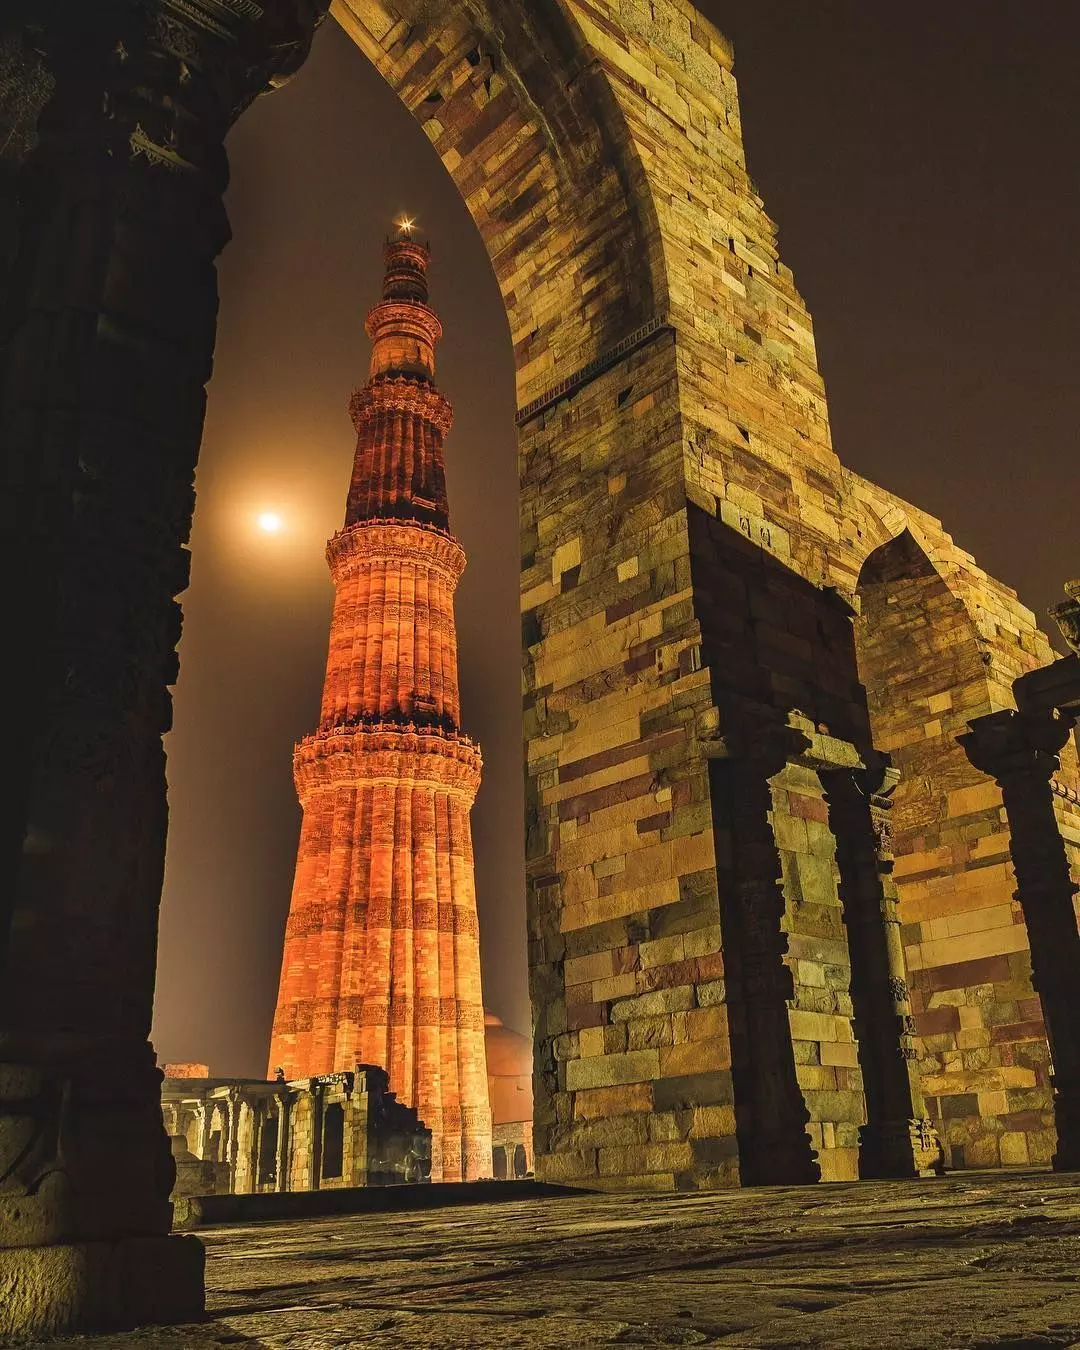 qutub minar is sun tower built by raja vikramaditya claims asi ex officer dharamveer sharma